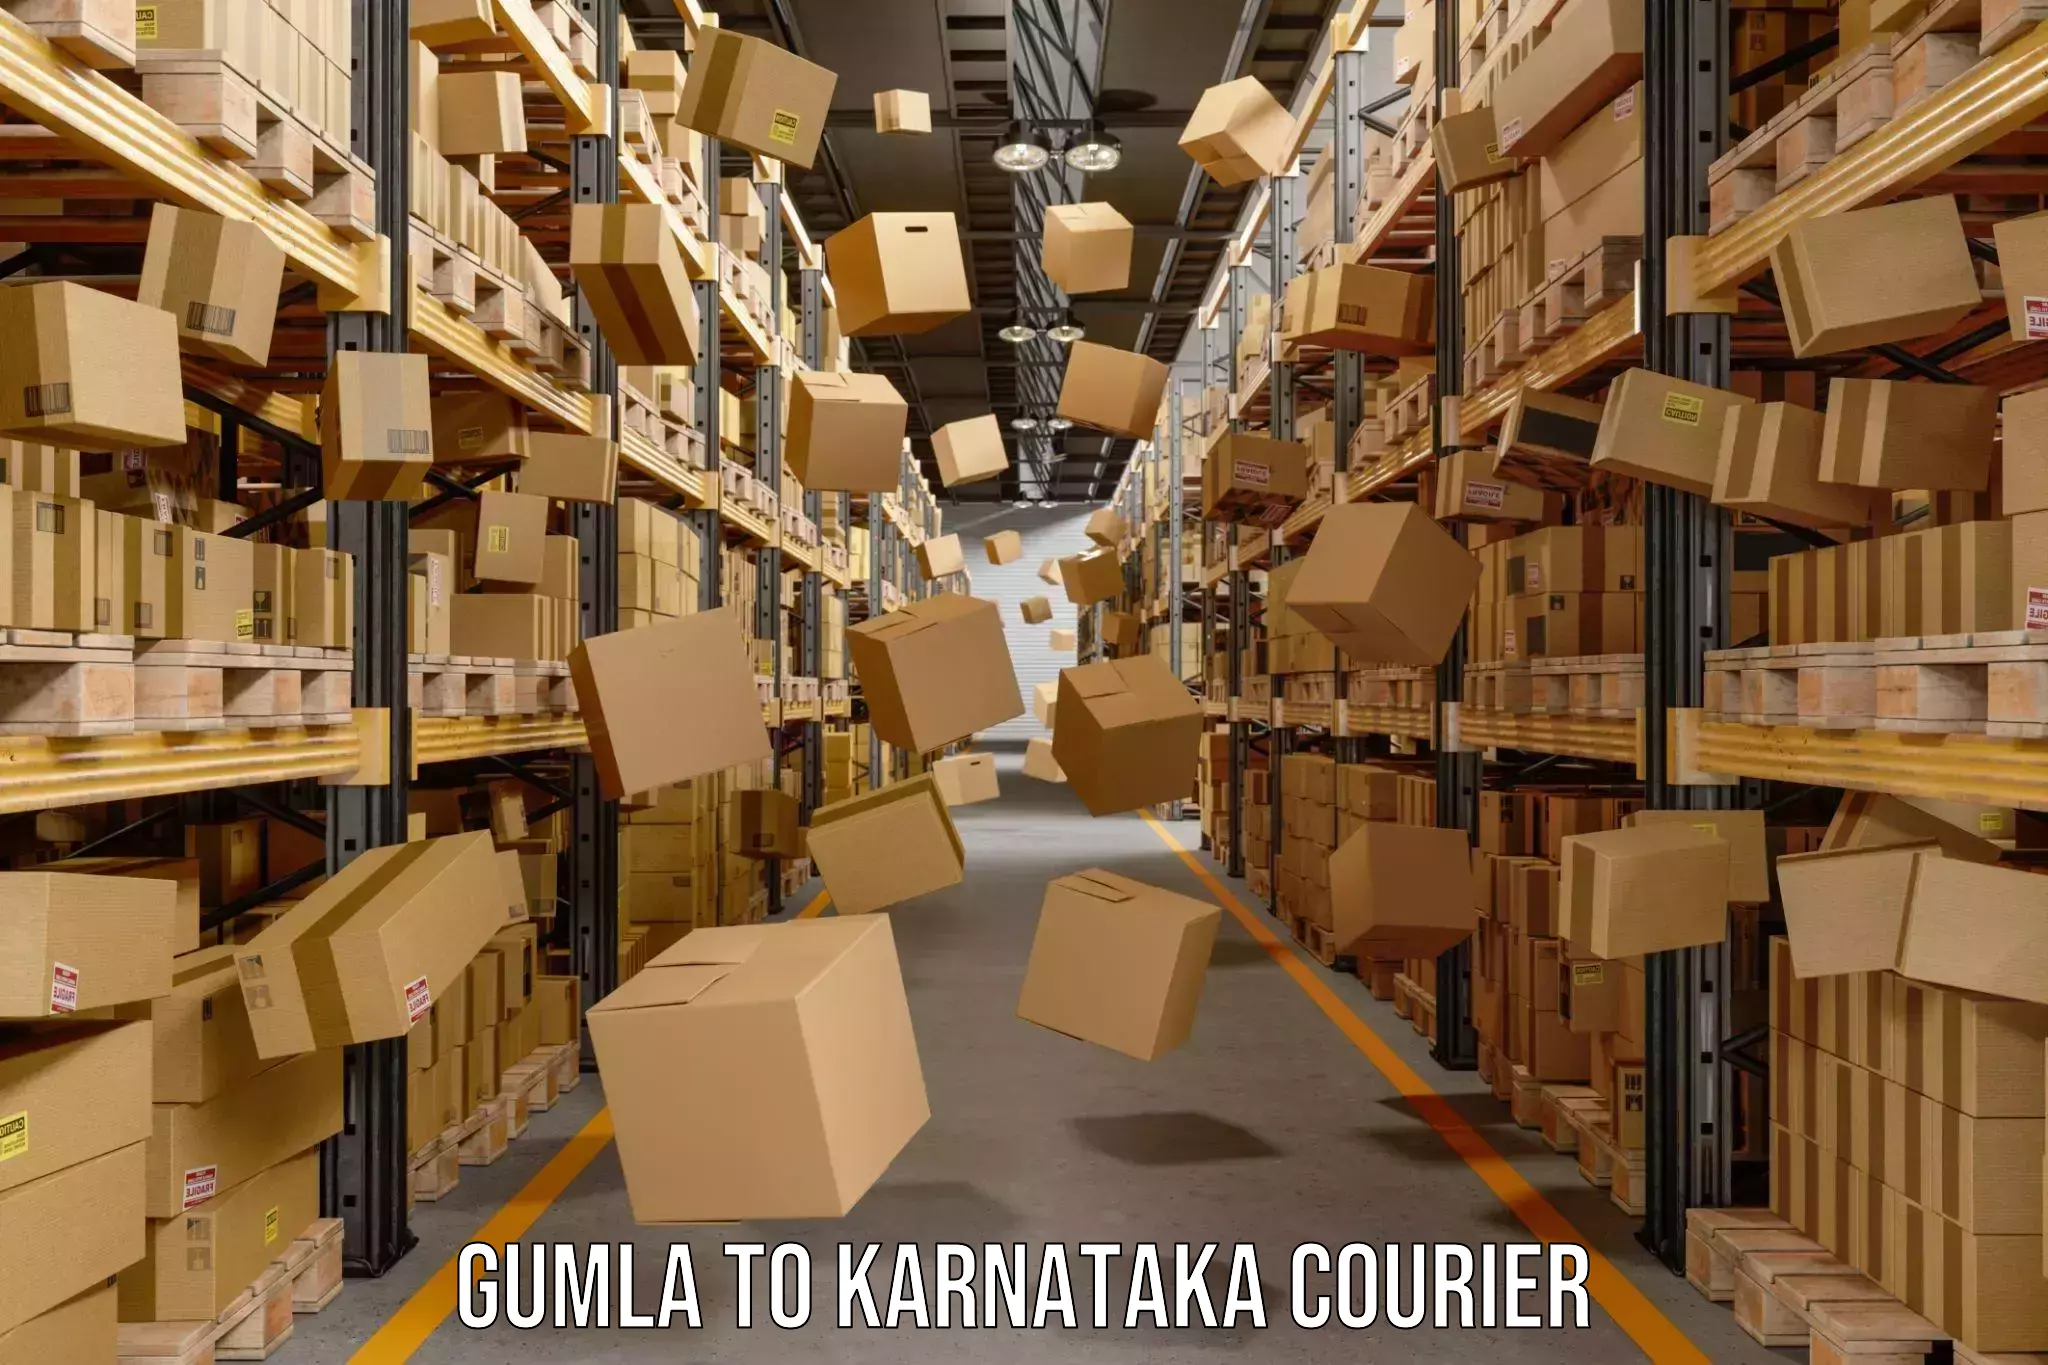 Courier service efficiency in Gumla to Karkala